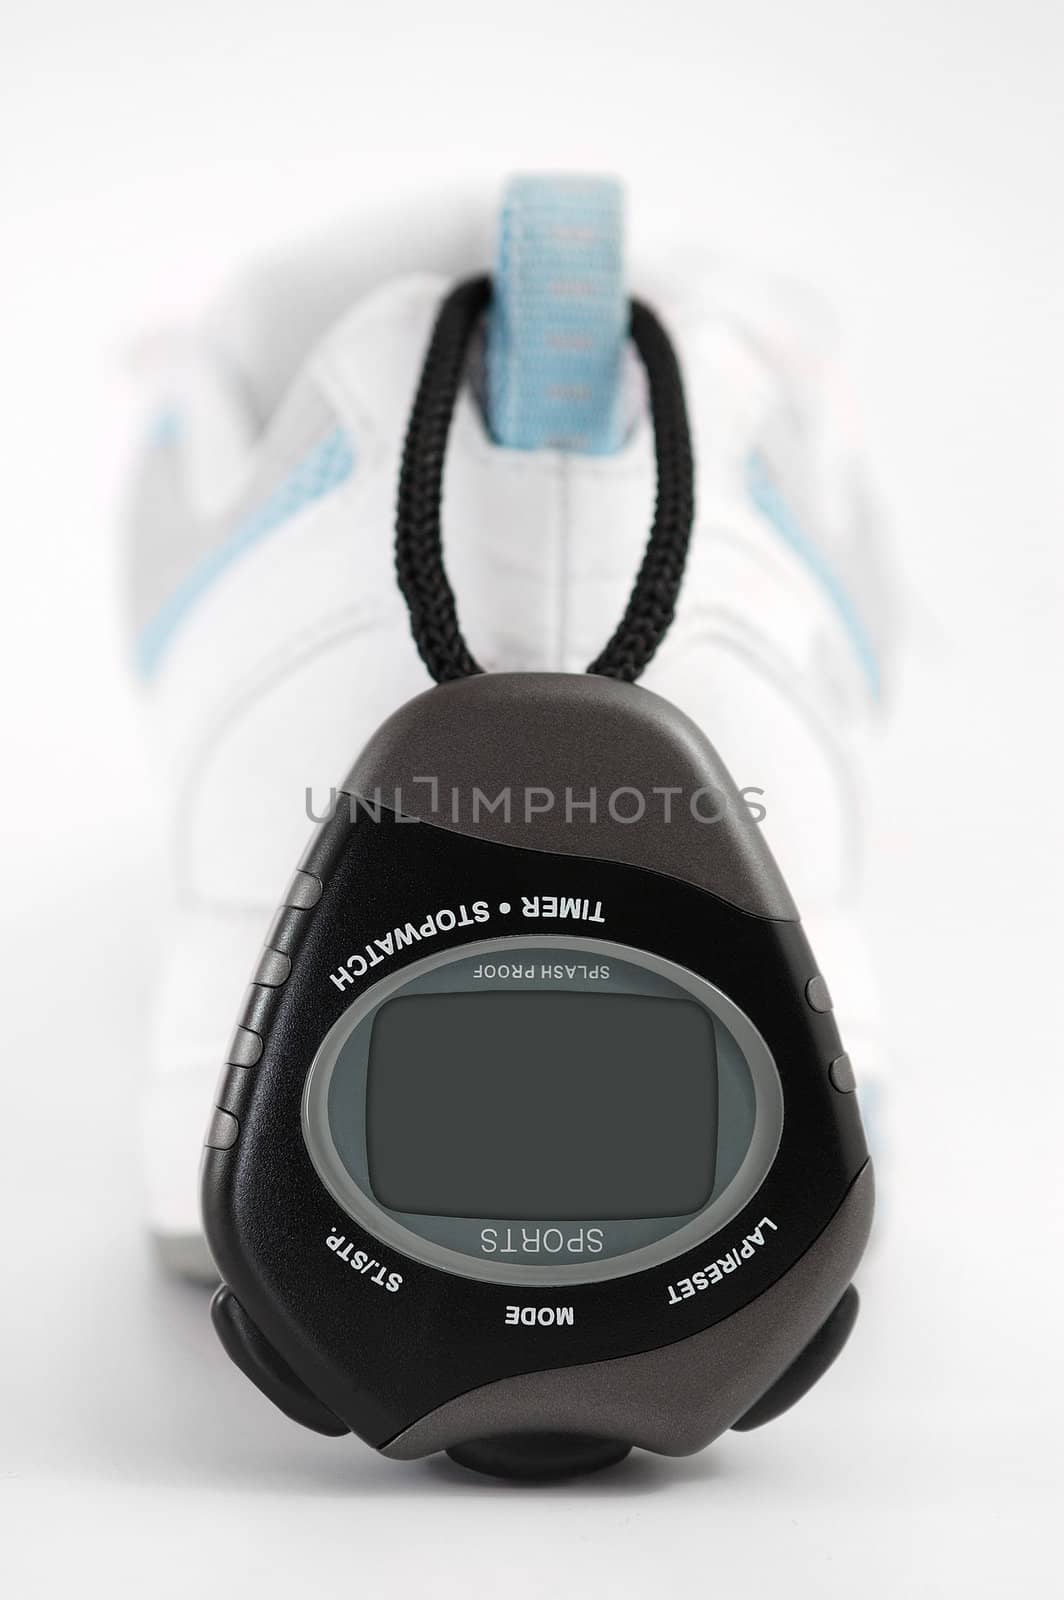 black digital watch on running shoe